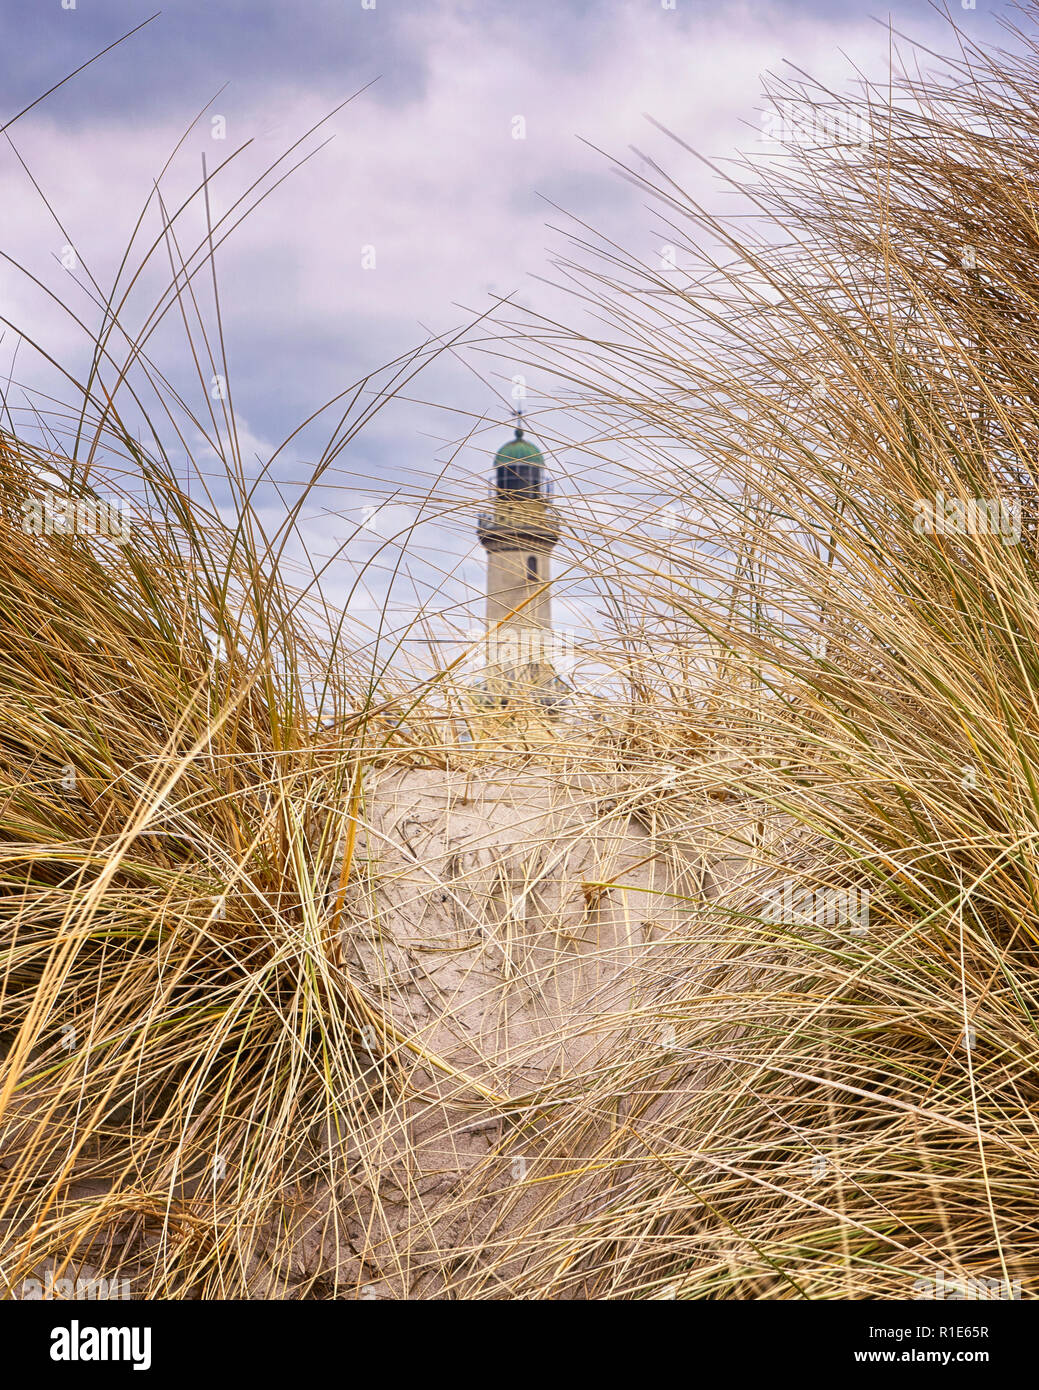 Lighthouse in Warnemünde in the dunes between the dune grass. Stock Photo